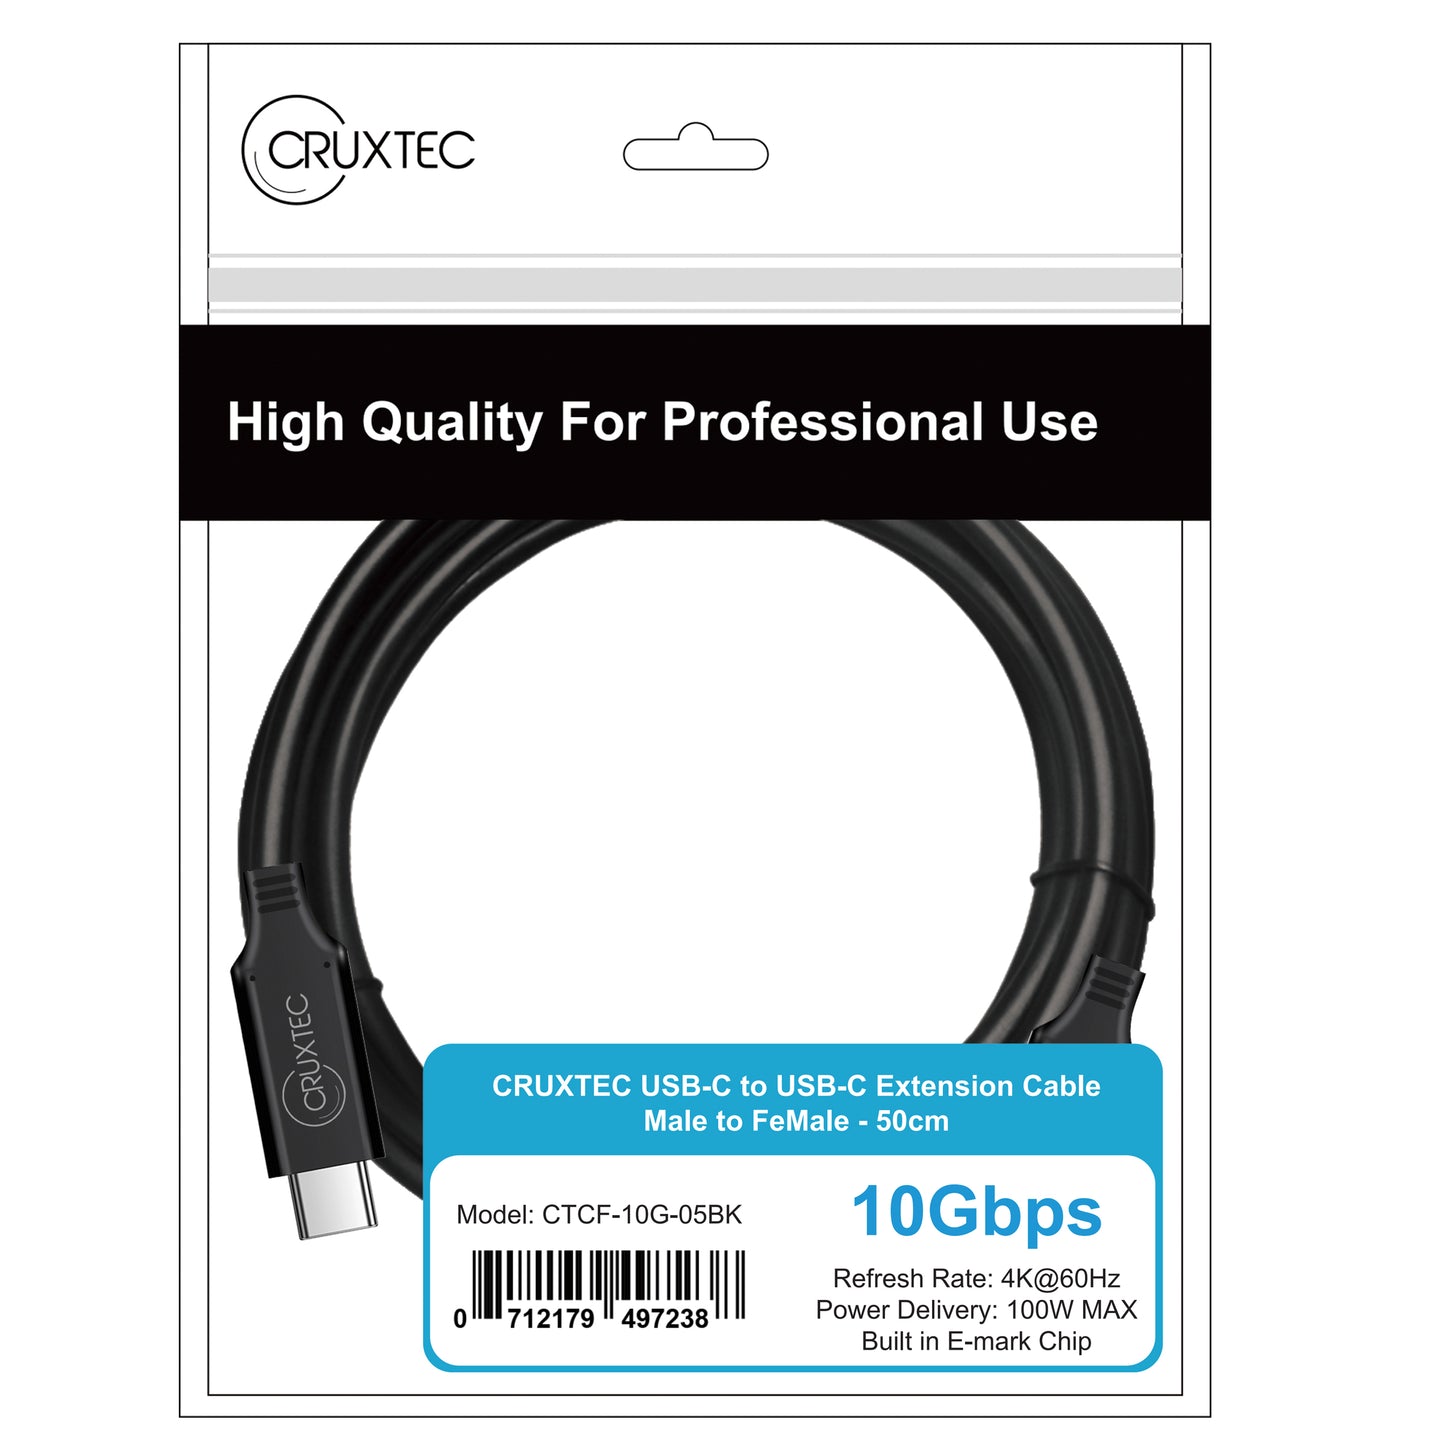 Cruxtec USB-C Male to USB-C Female Extension Cable 50cm